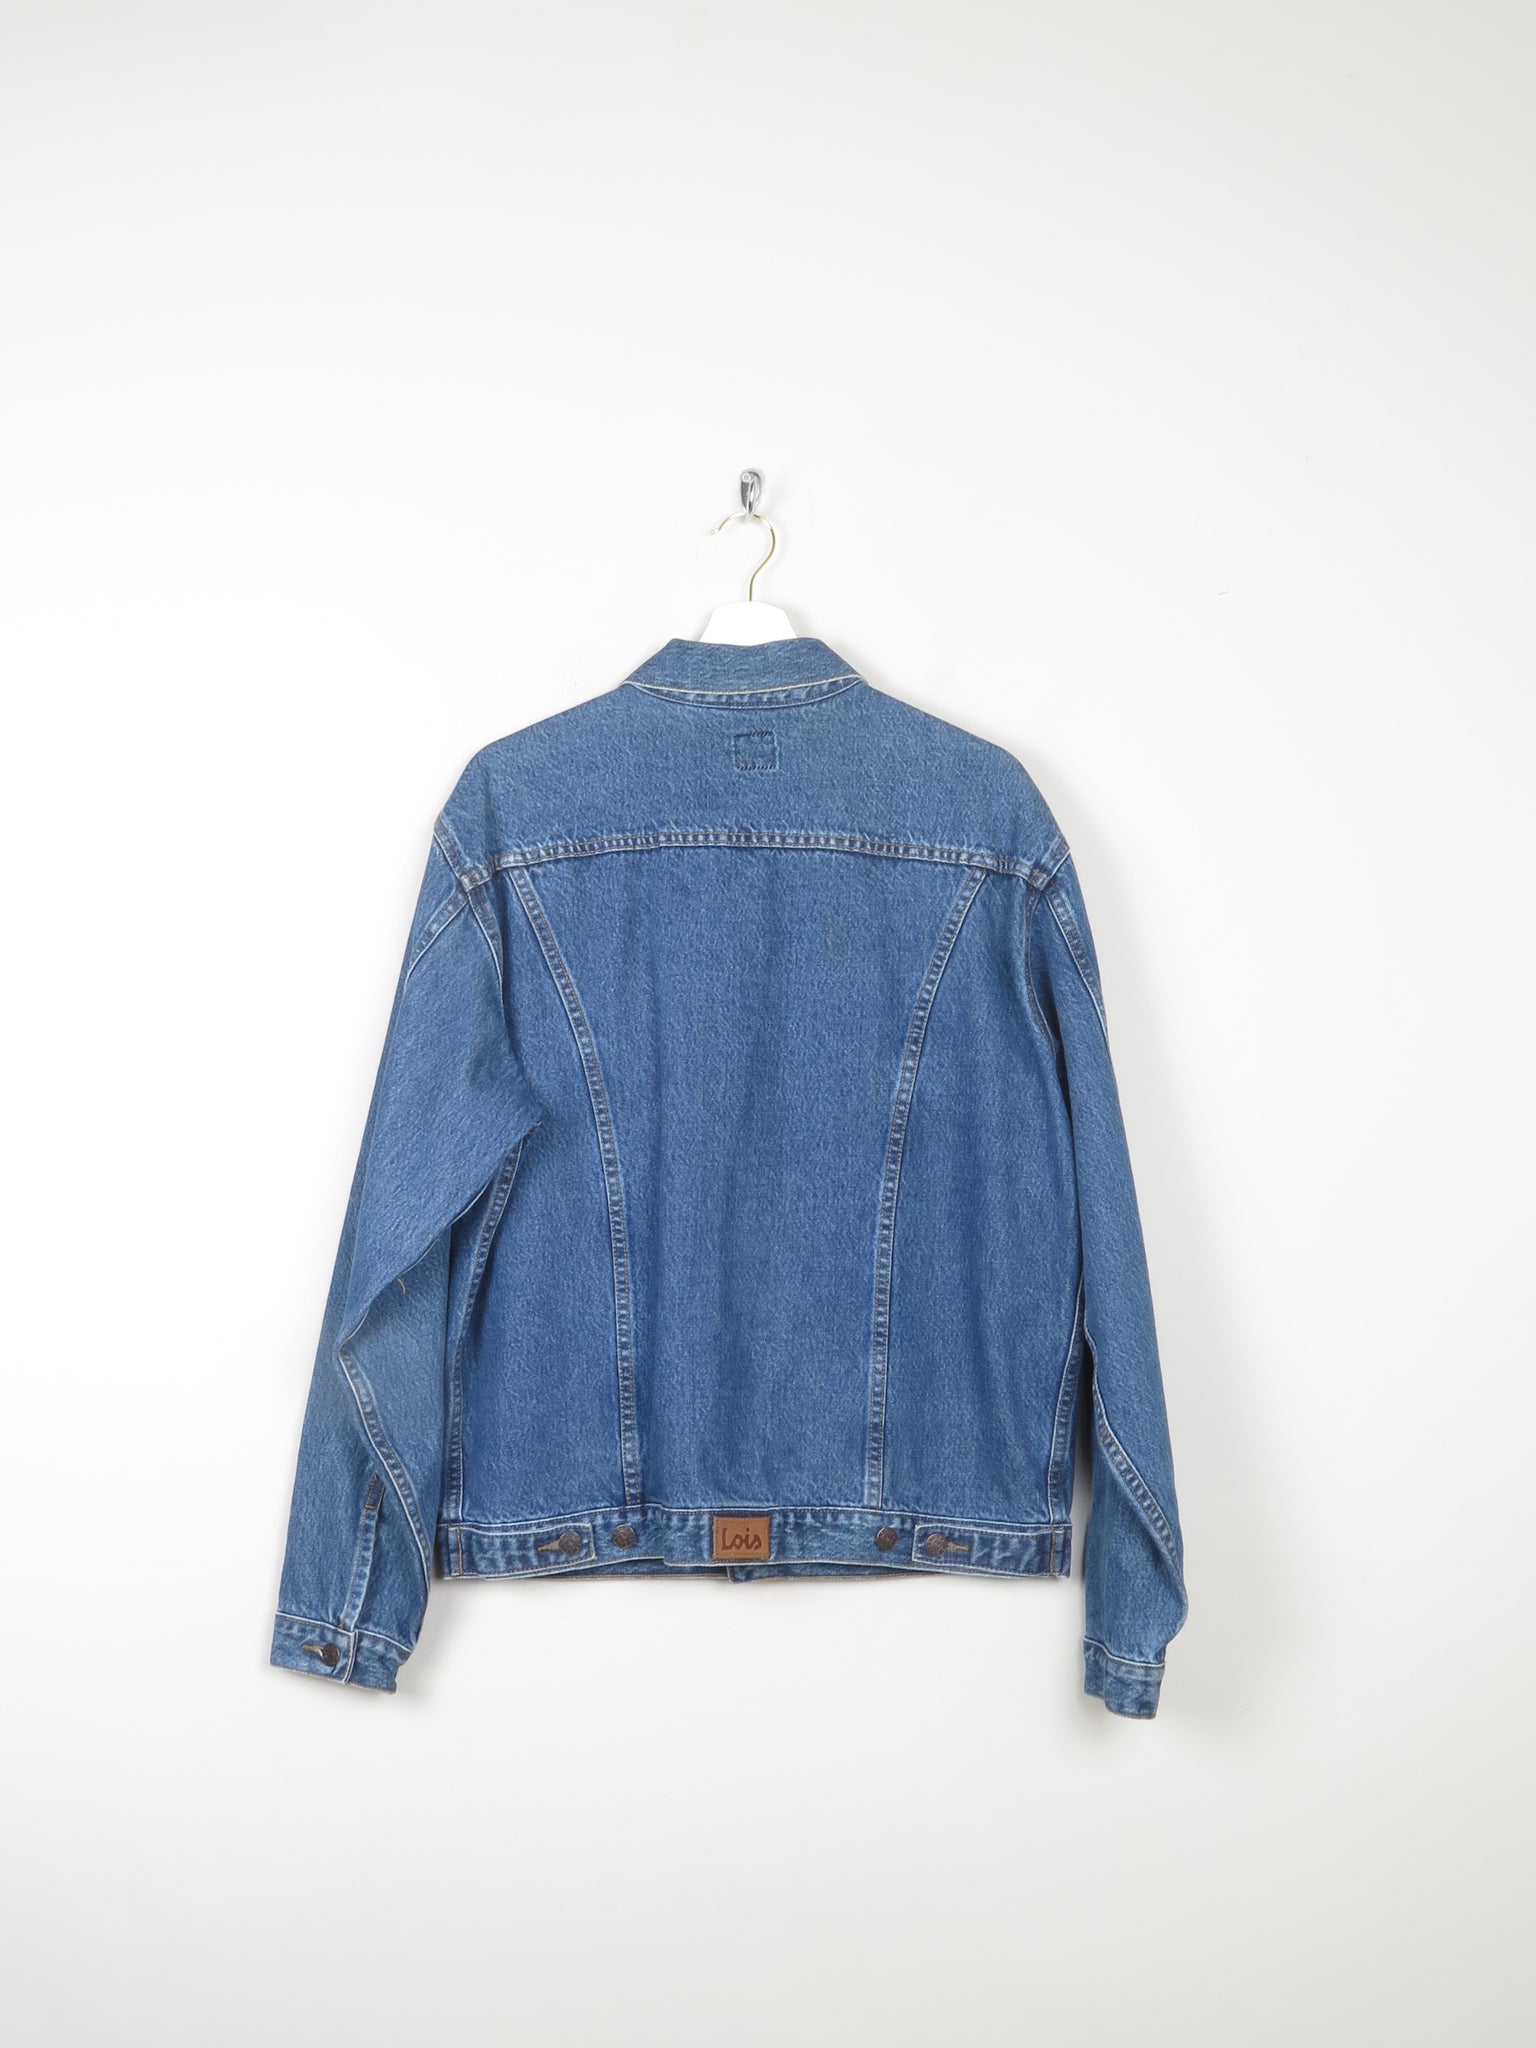 Men's Blue Denim Vintage Jacket Lois M